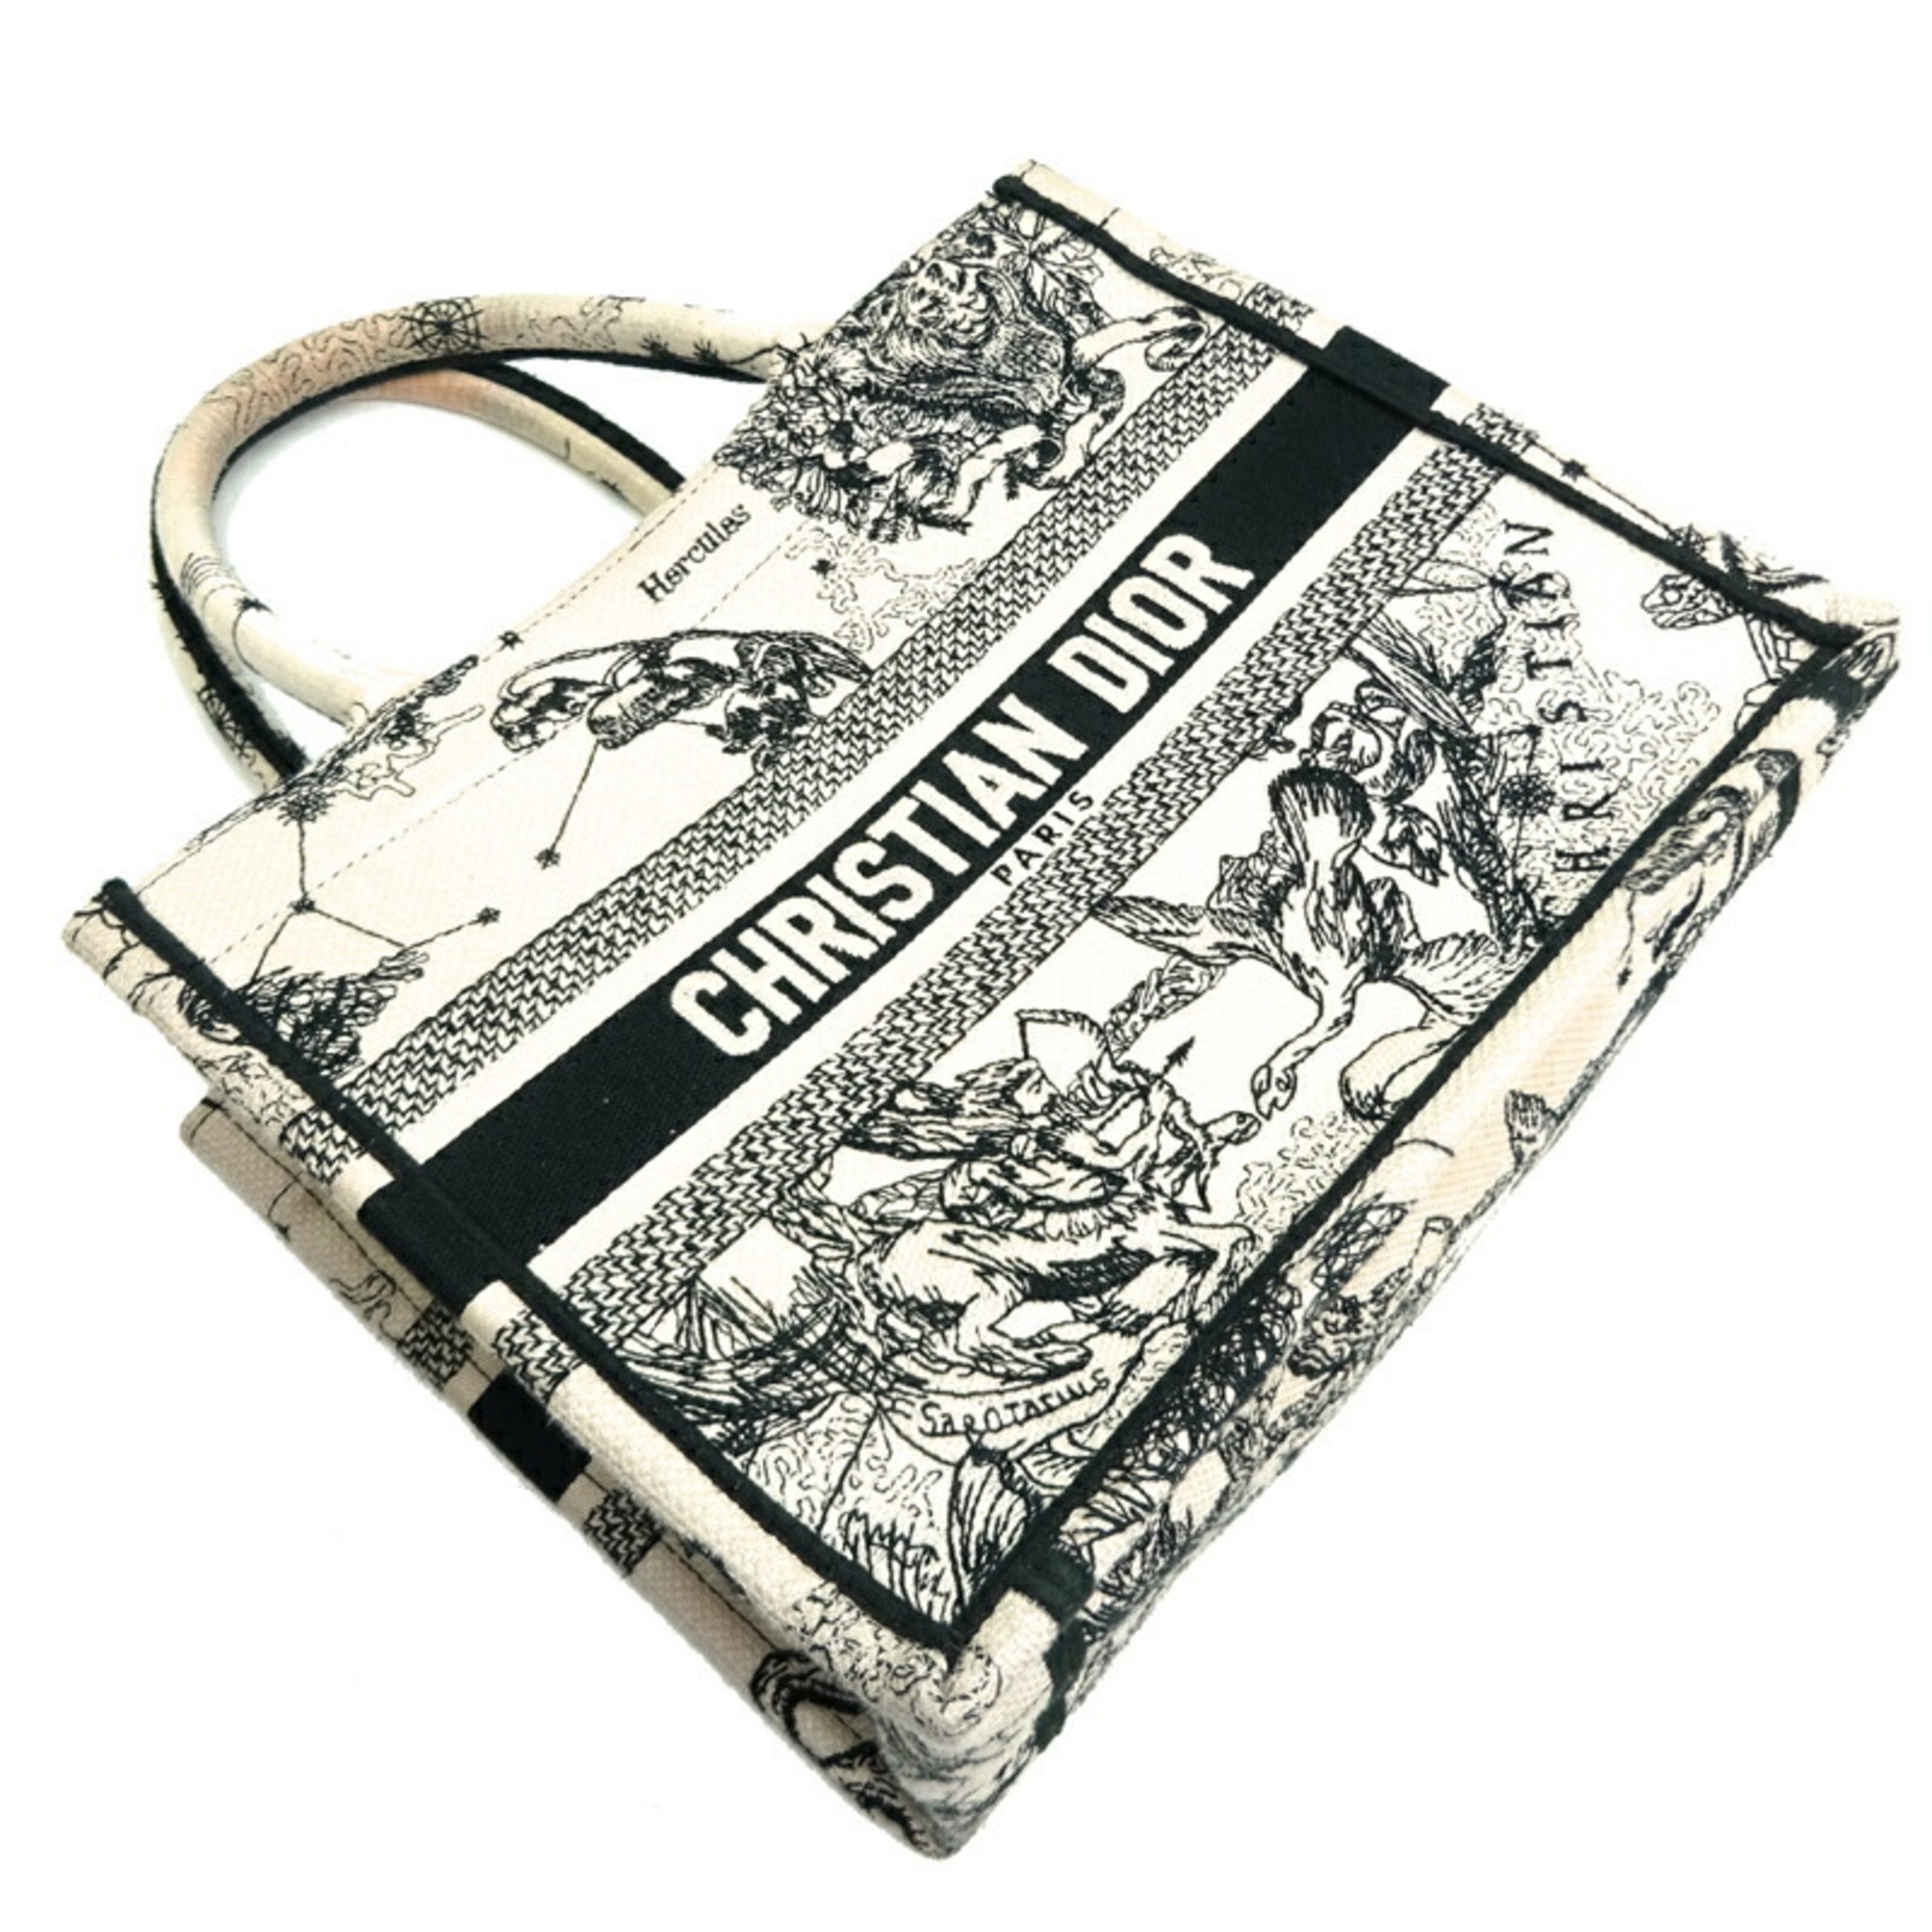 Christian Dior Book Tote Small Women's Handbag M1265ZRHZ Canvas Ivory